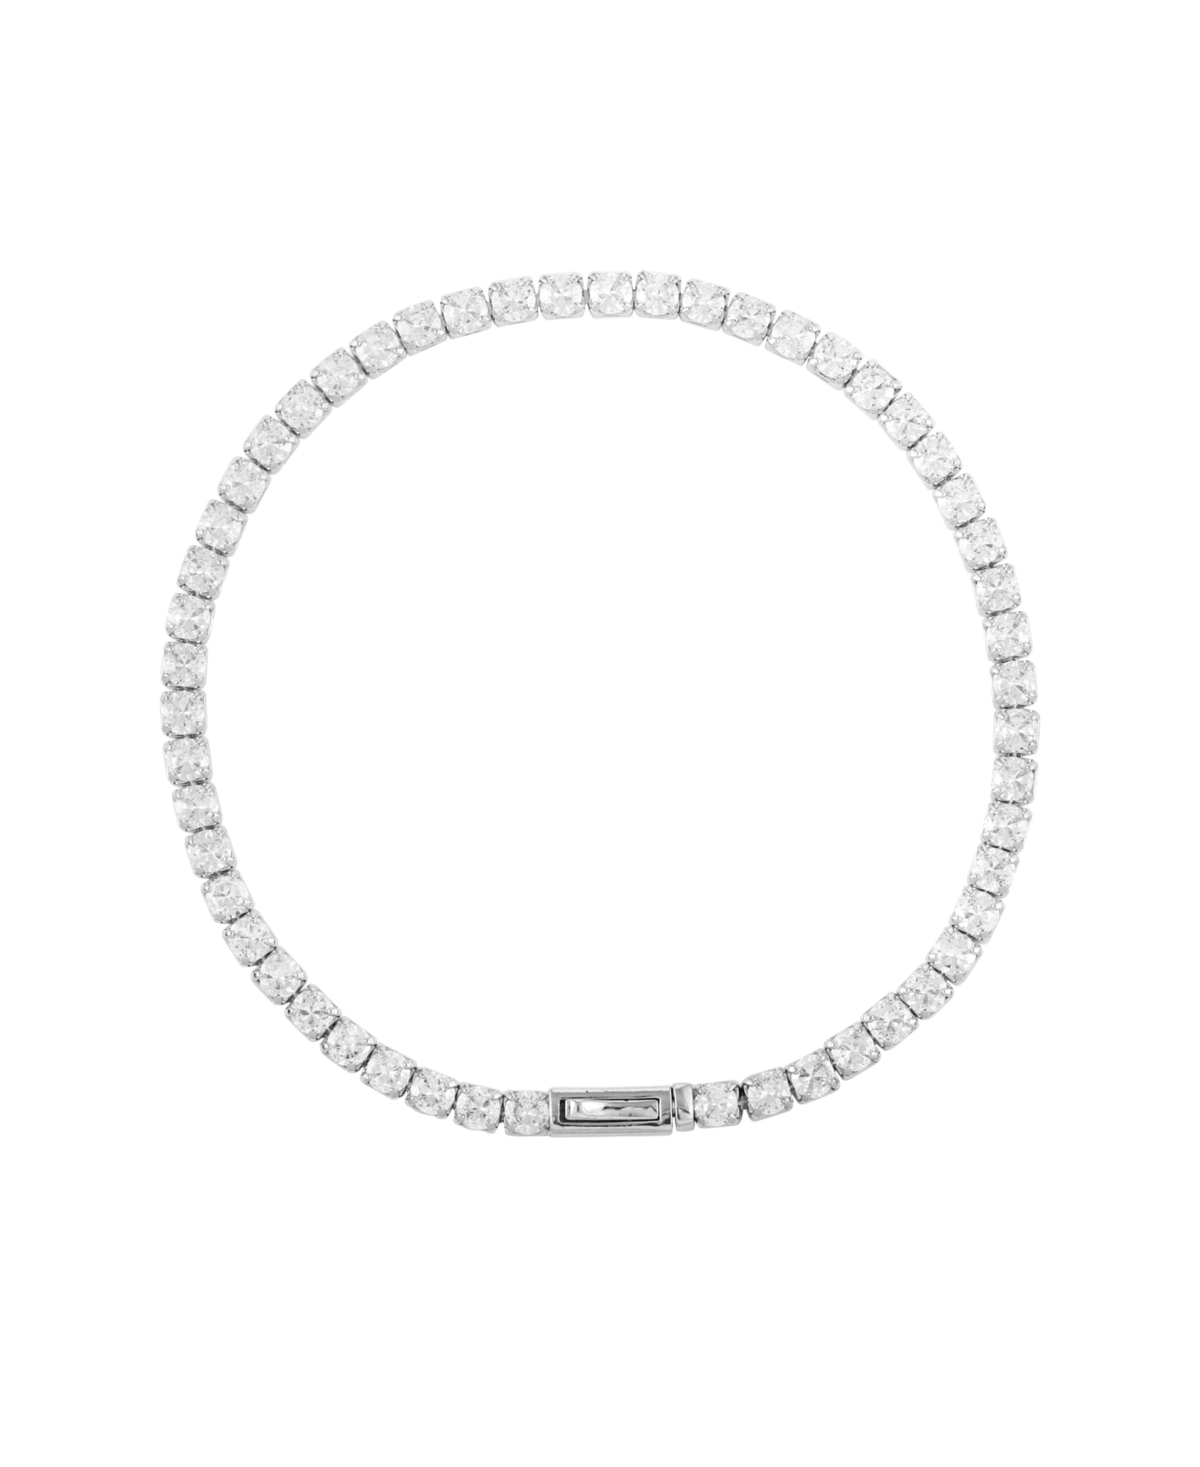 Silver-Tone Cubic Zirconia Tennis Bracelet - Silver